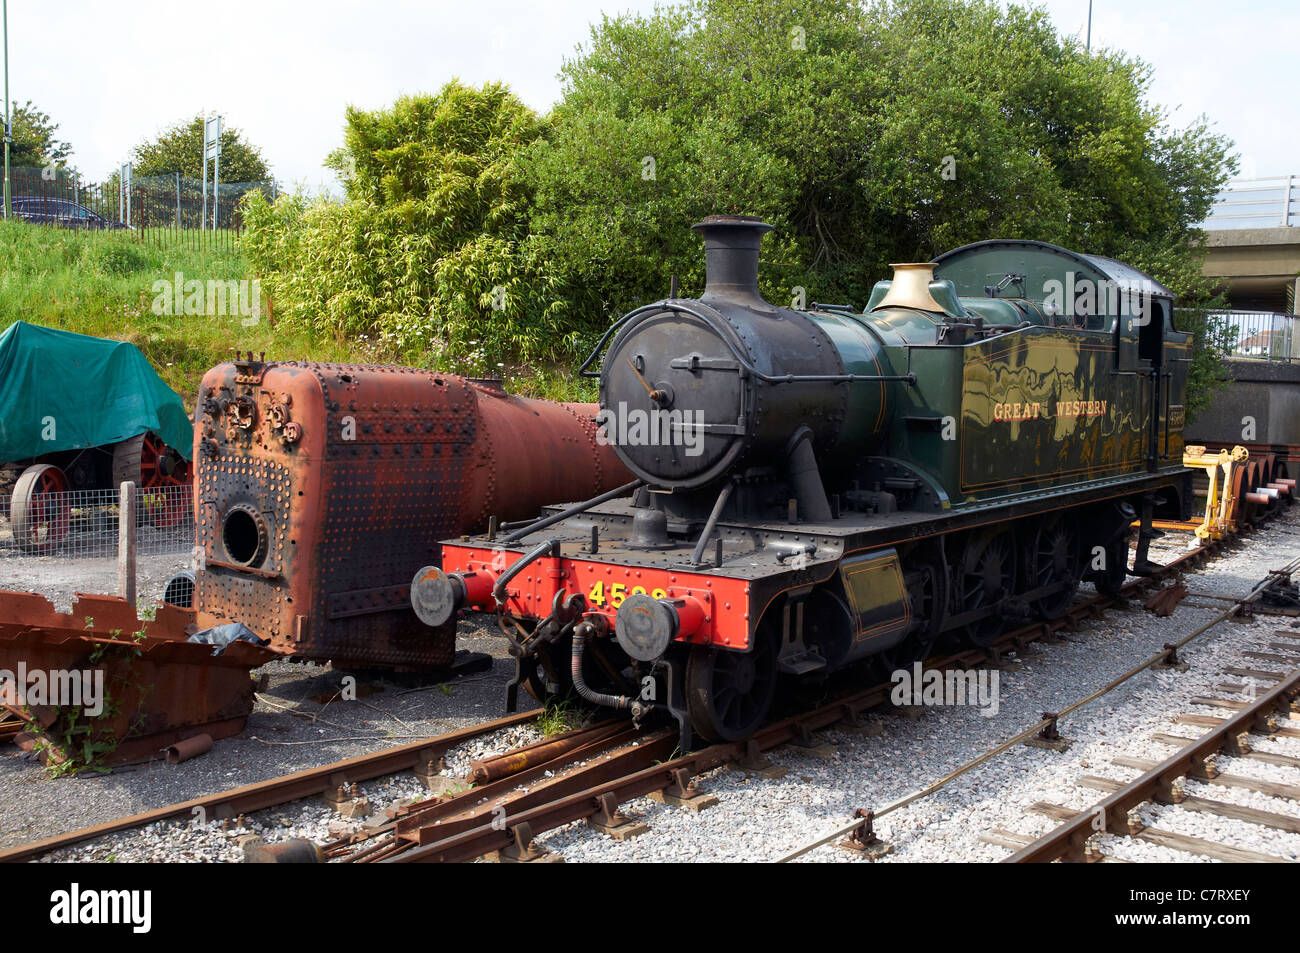 Dartmouth Steam Railway from Paignton to Kingswear (for Dartmouth) - a tourist railway in Devon England. Stock Photo